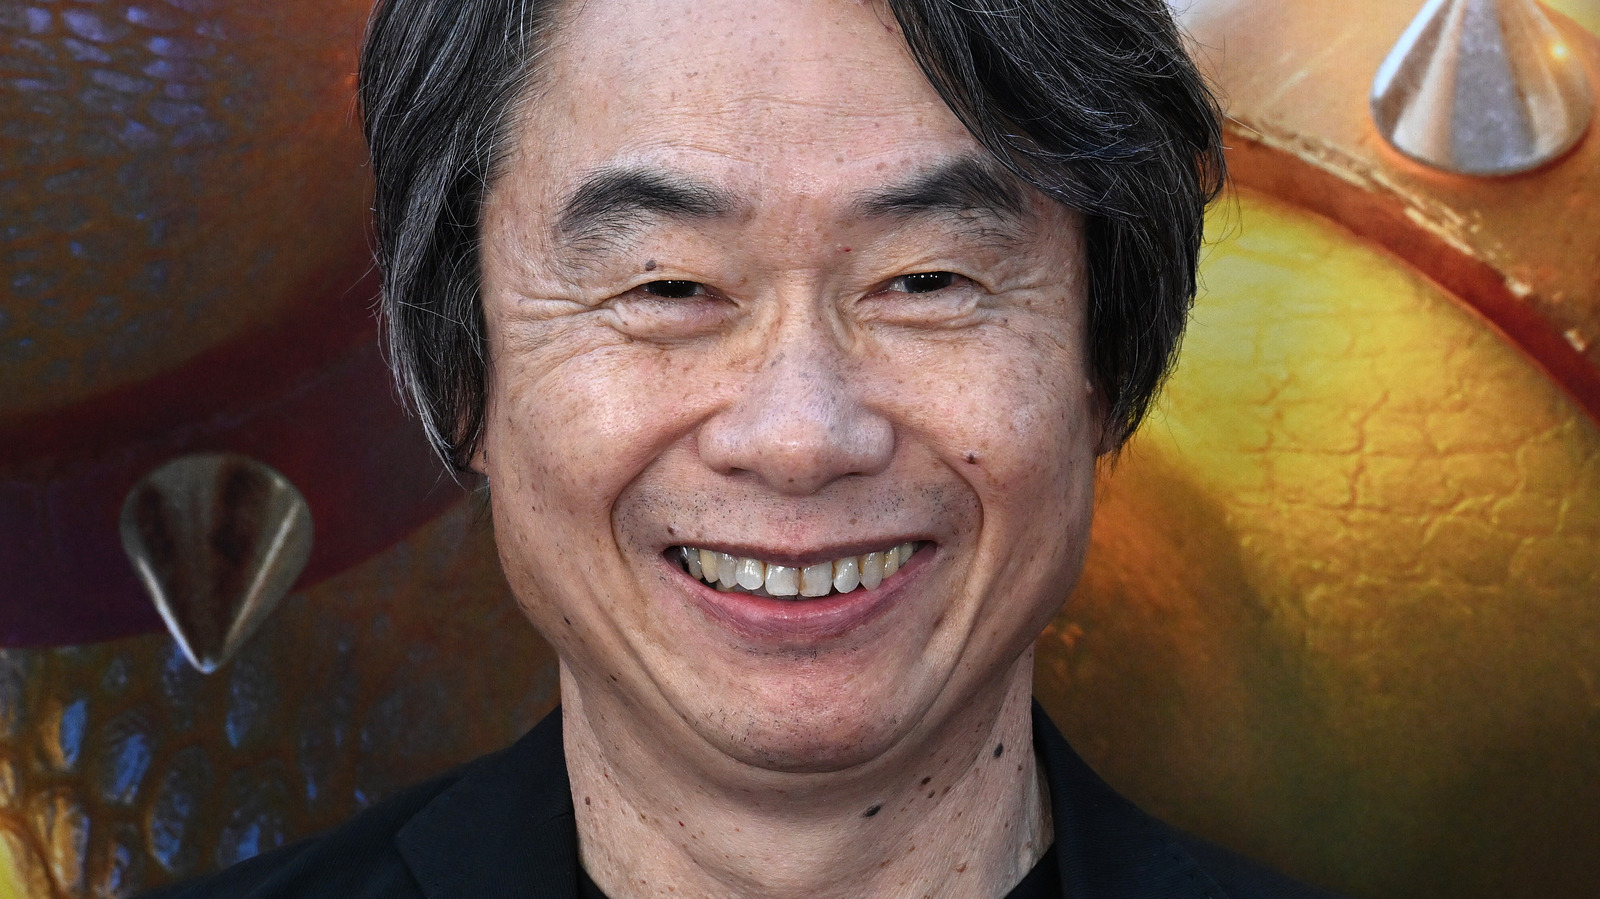 Nintendo Reveals How Much Game Directors Like Shigeru Miyamoto Make Per Year